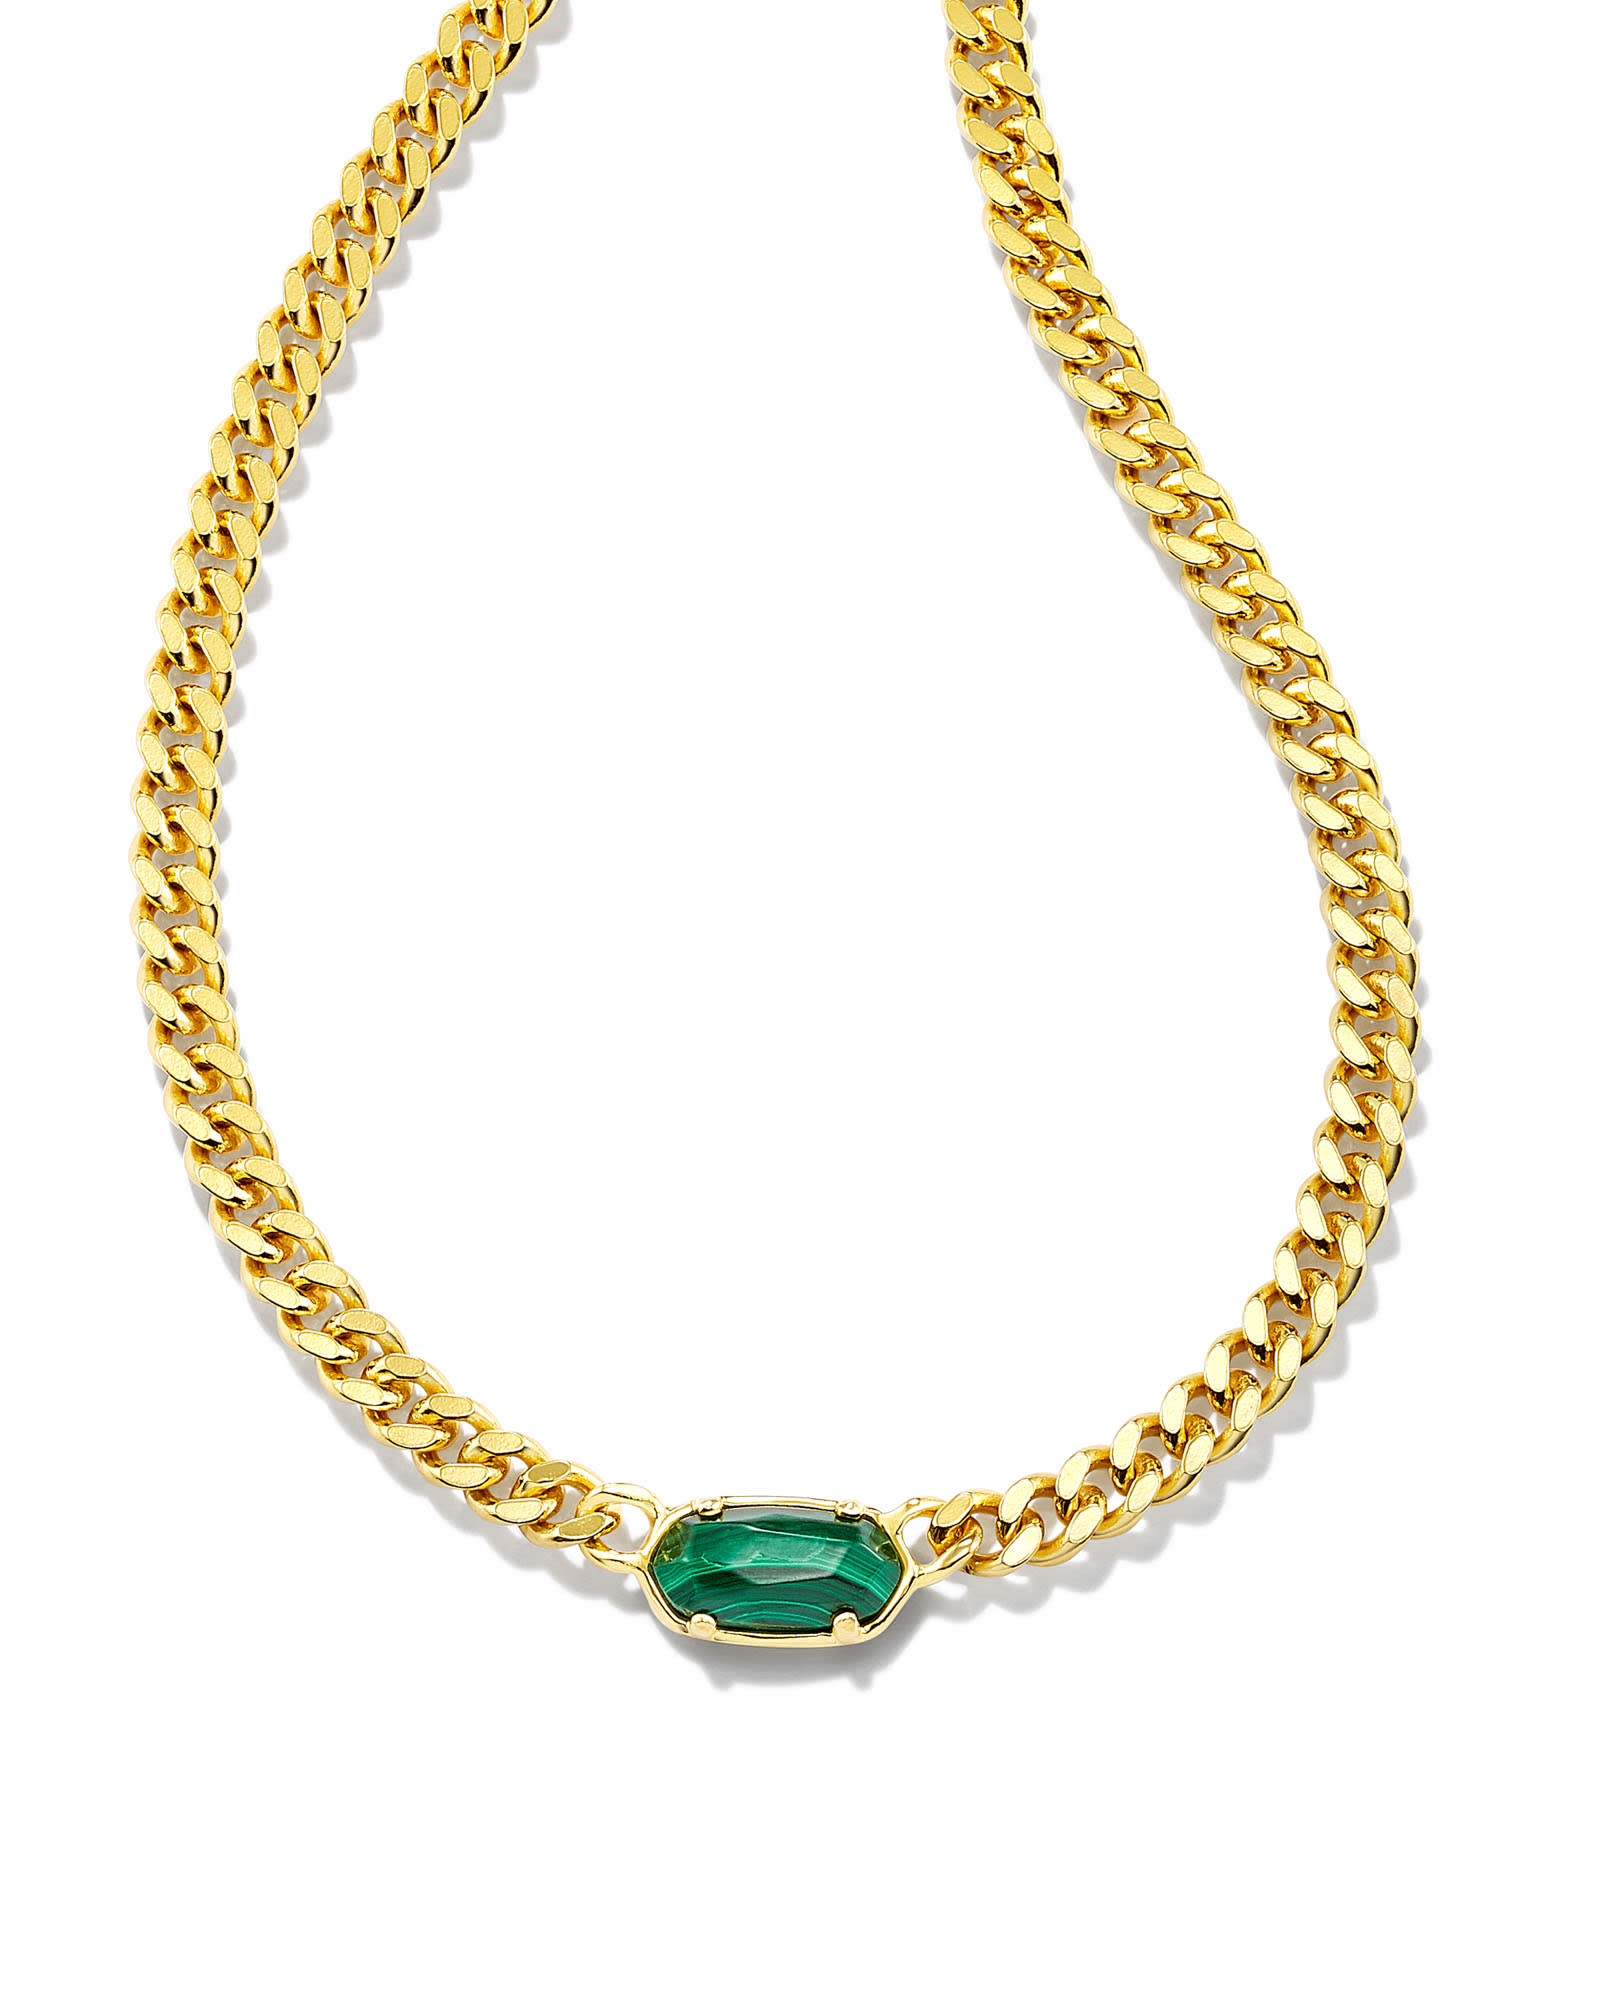 Kendra Scott Elisa 18k Gold Vermeil Curb Chain Necklace in Green | Malachite